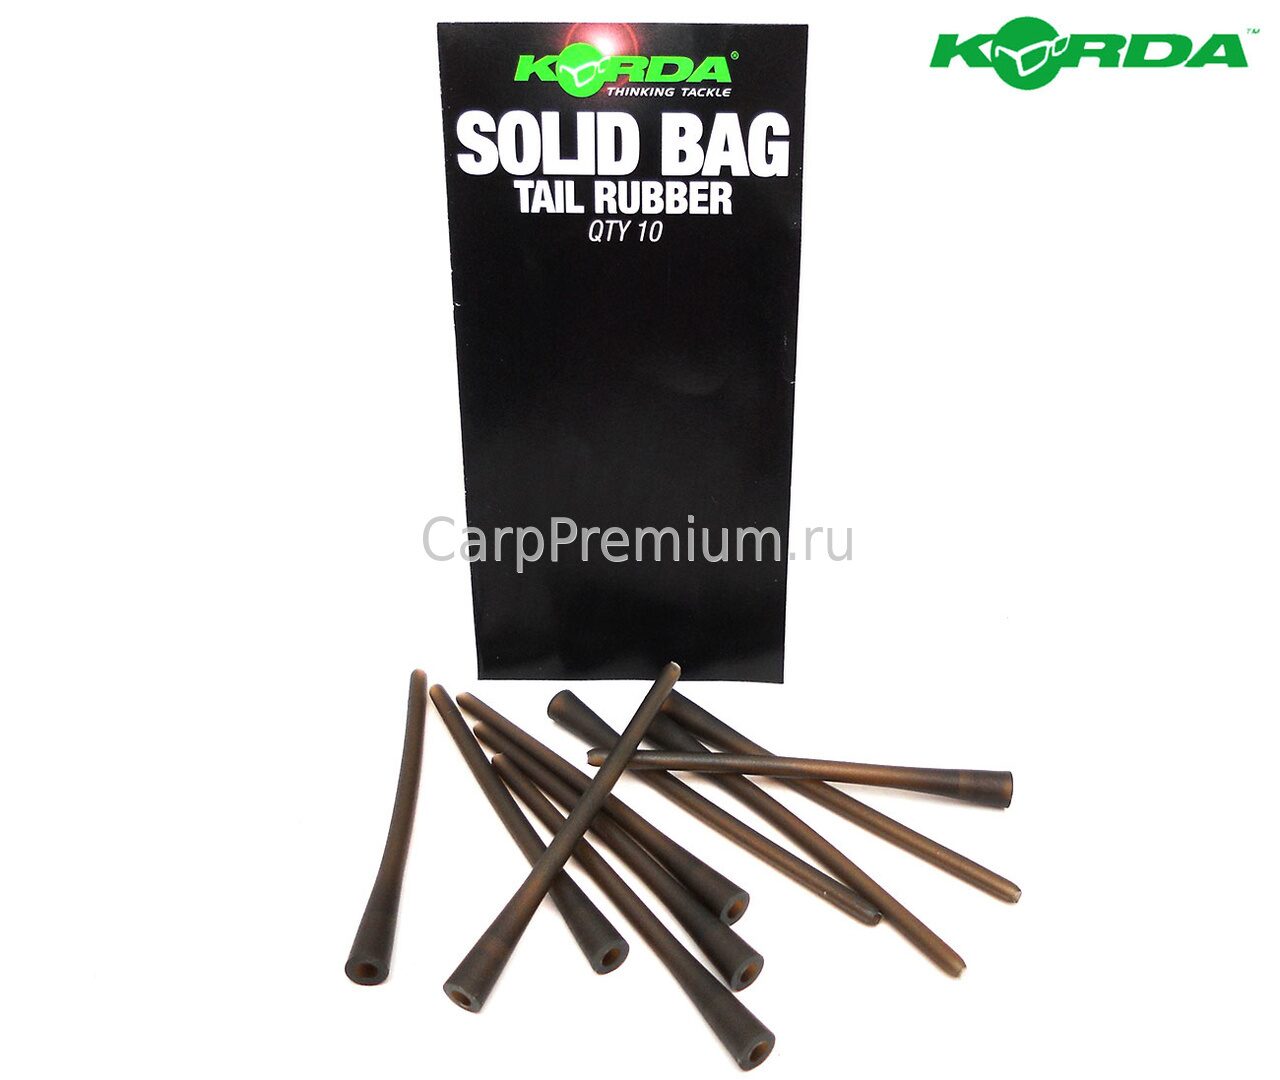 Конус эластичный для грузил Korda (Корда) - Solid Bag Tail Rubber, 10 шт